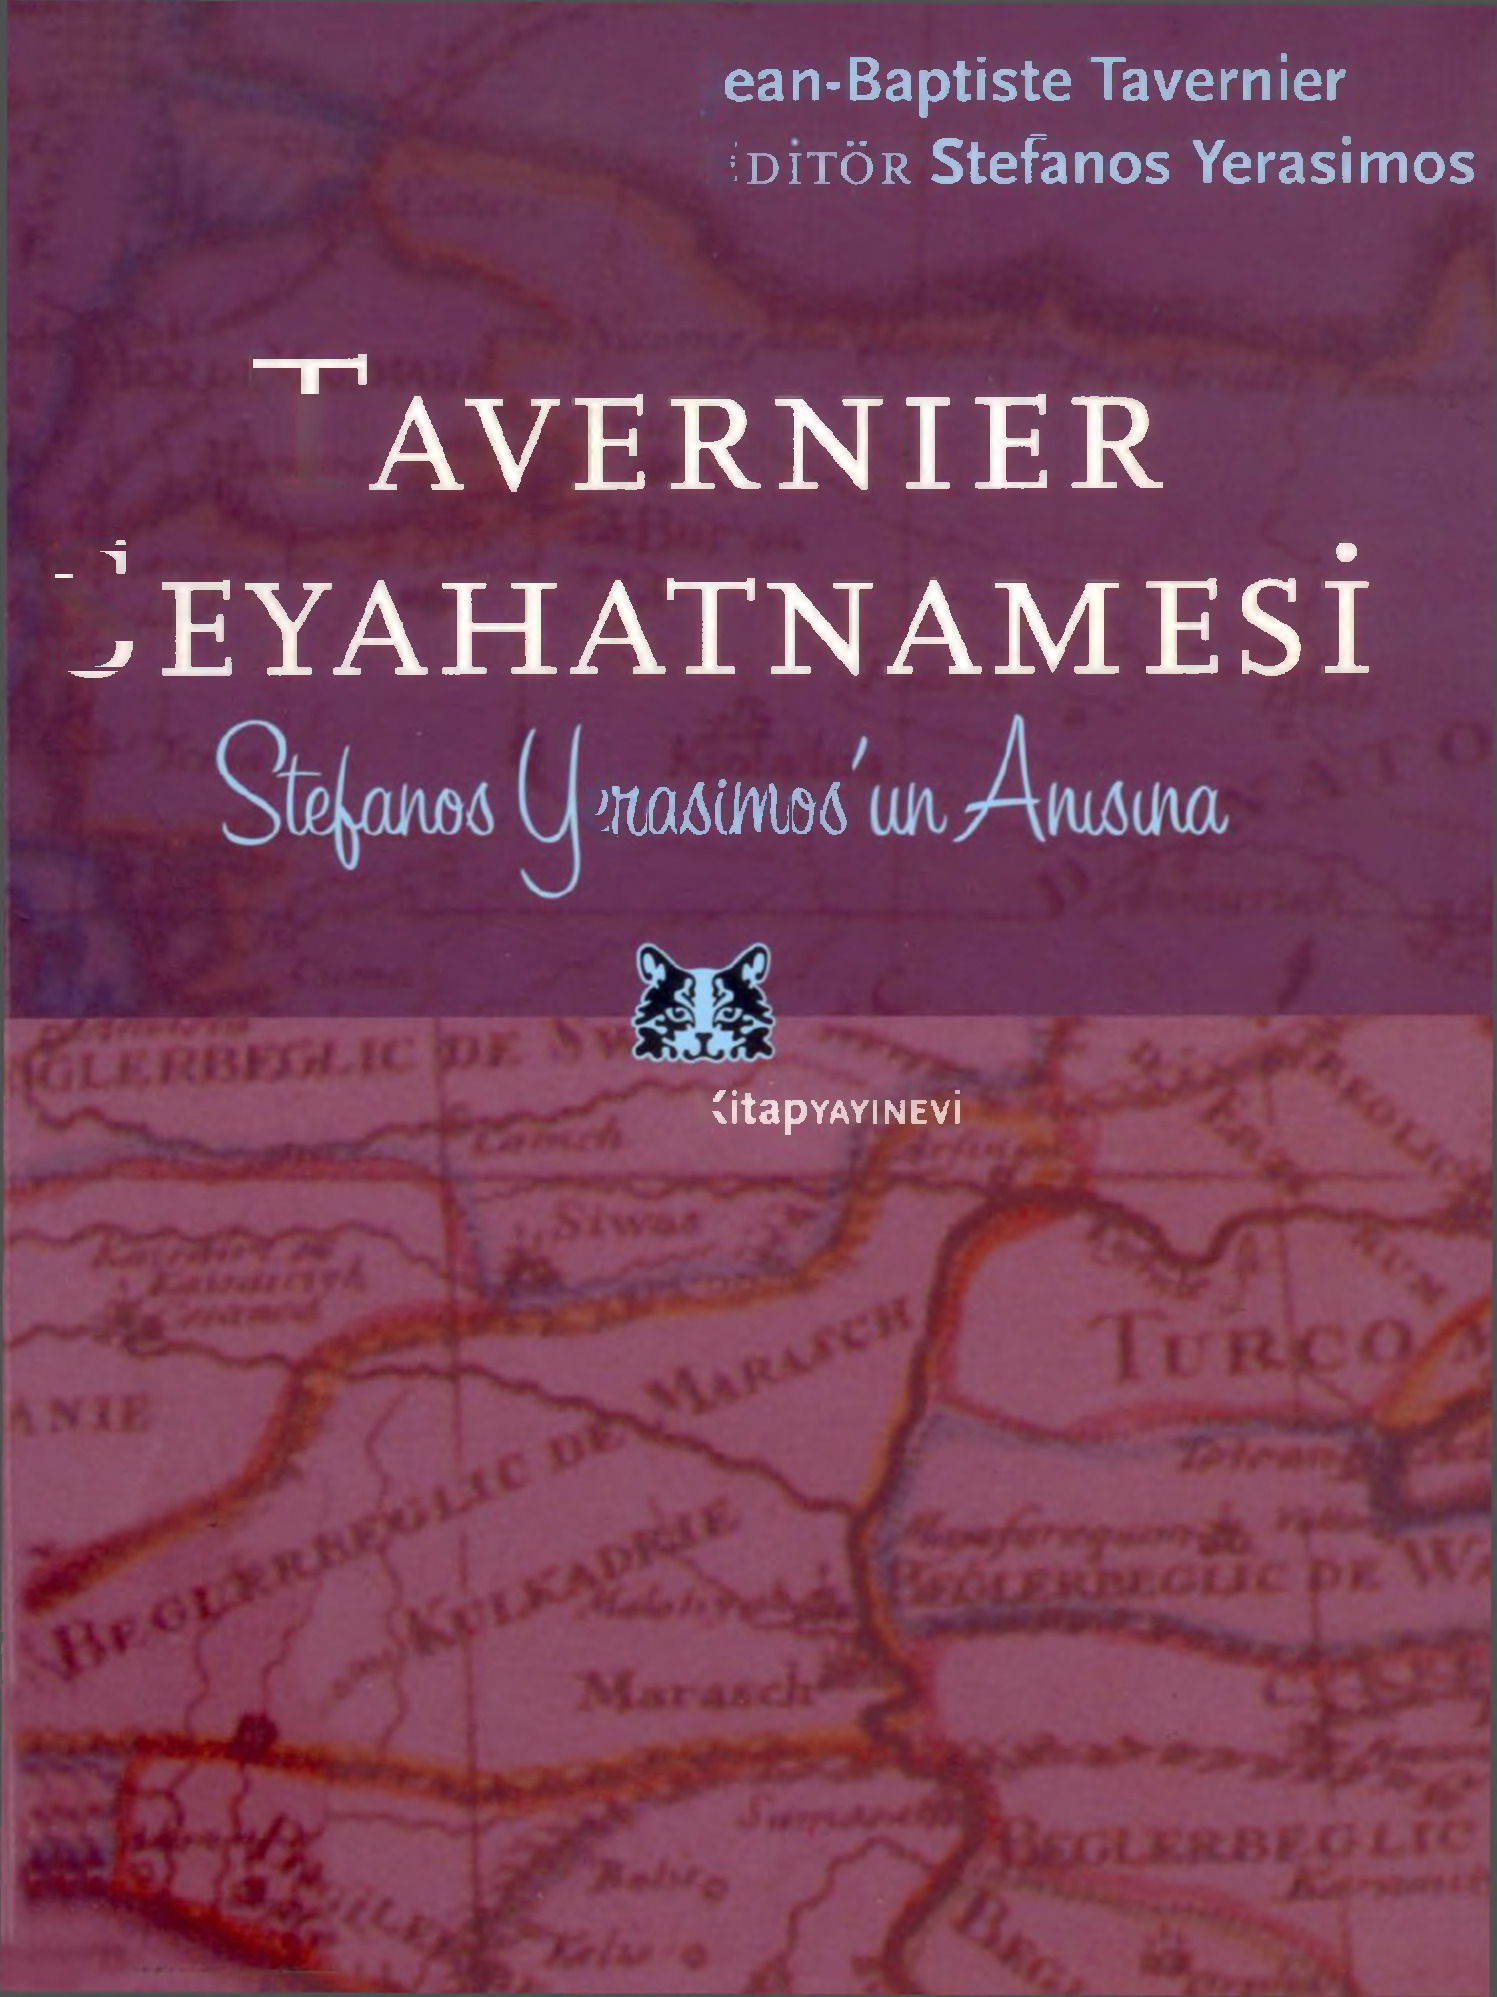 Tavernier Seyahatnamesi-Hean Baptiste Tavernier-Çev-Teoman Tuncdoğan-2006-346s